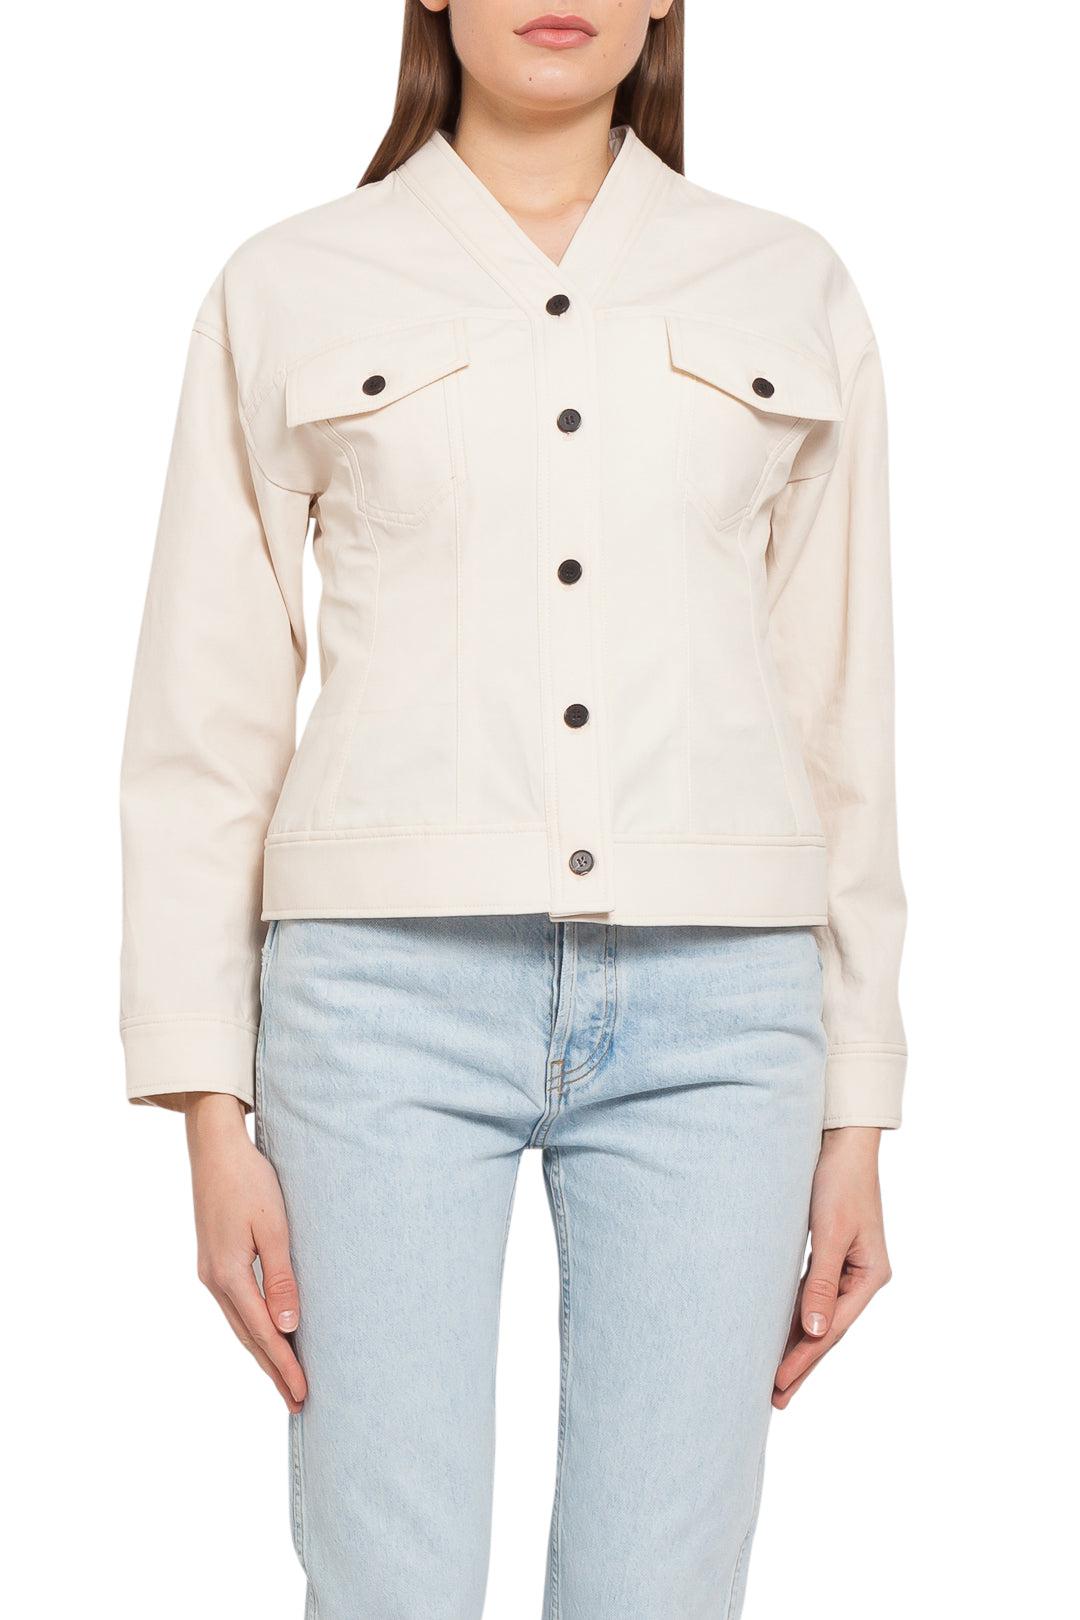 Lvir-Linen and cotton jacket-LV21S-JK04-white-dgallerystore